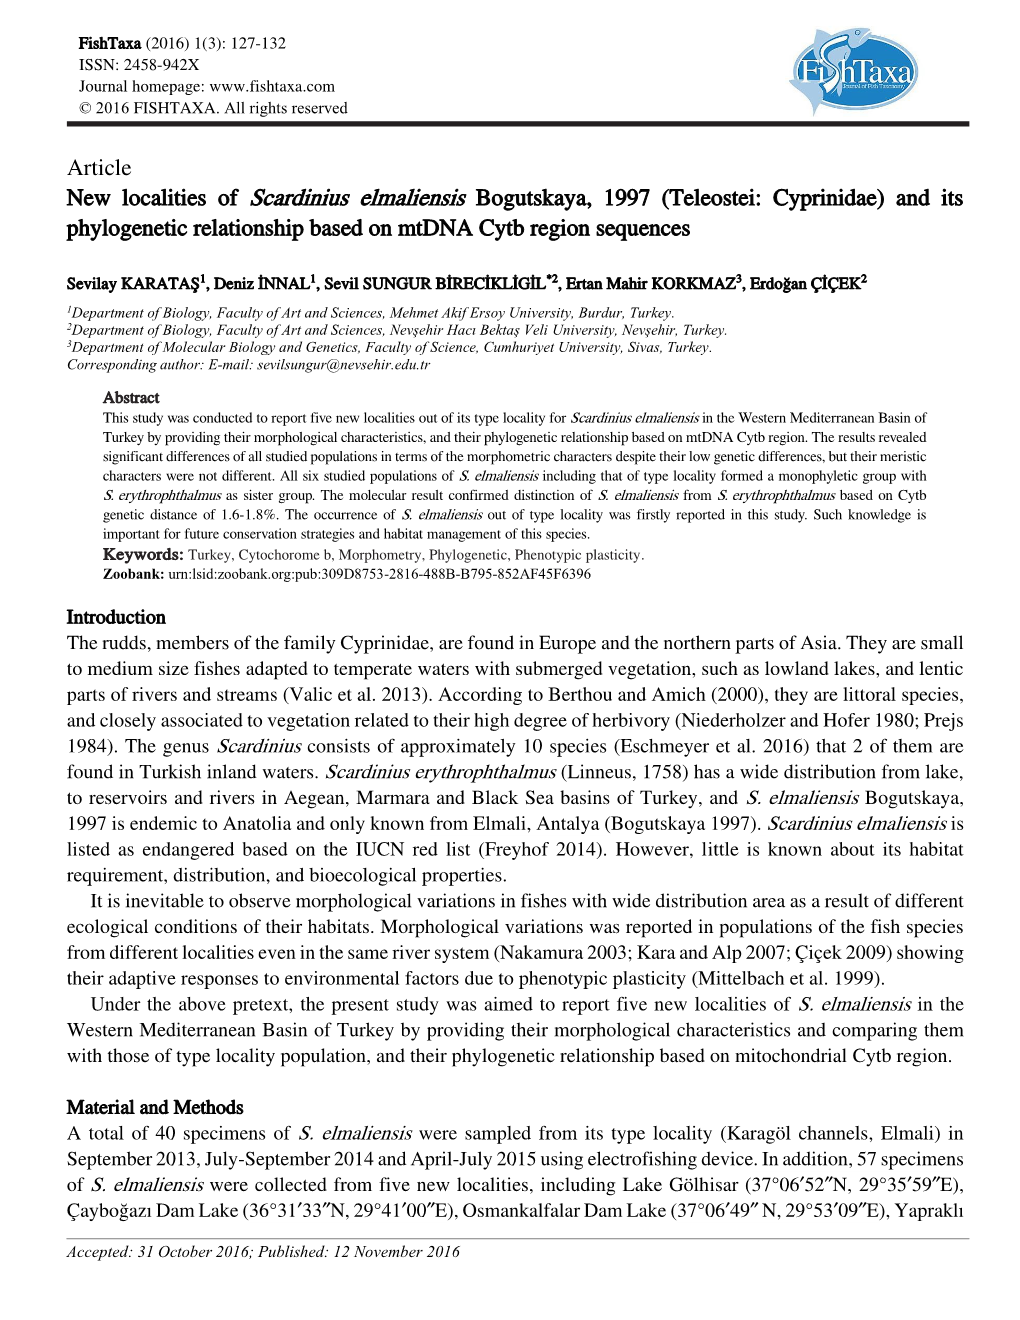 Article New Localities of Scardinius Elmaliensis Bogutskaya, 1997 (Teleostei: Cyprinidae) and Its Phylogenetic Relationship Based on Mtdna Cytb Region Sequences